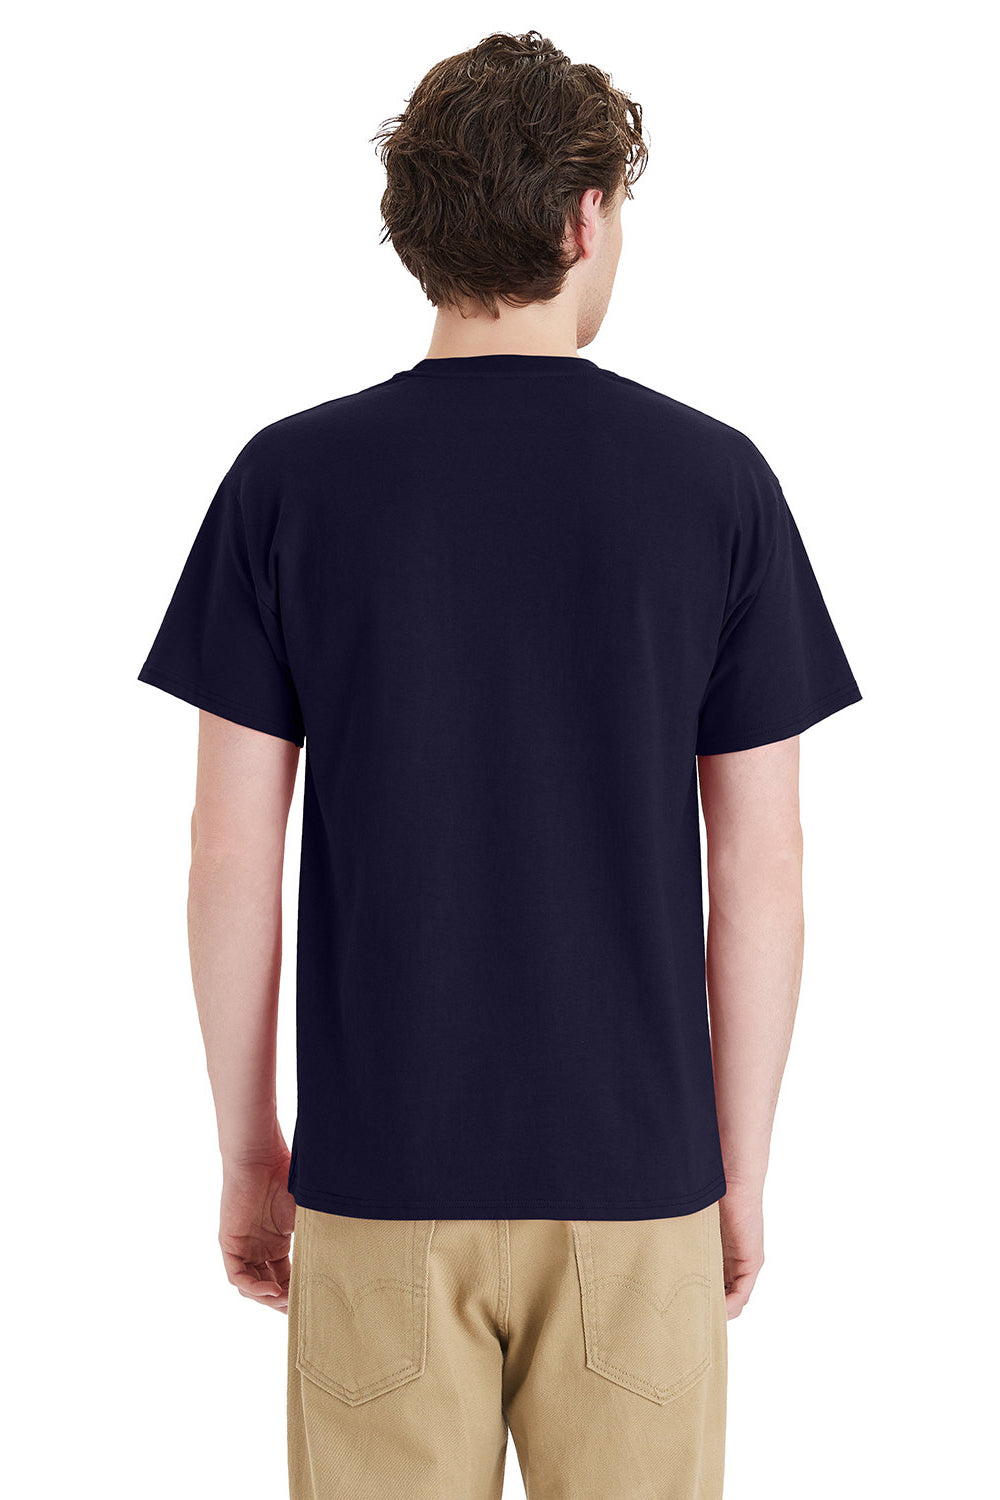 Hanes 5290P Mens Essential Short Sleeve Crewneck T-Shirt w/ Pocket Athletic Navy Blue Model Back